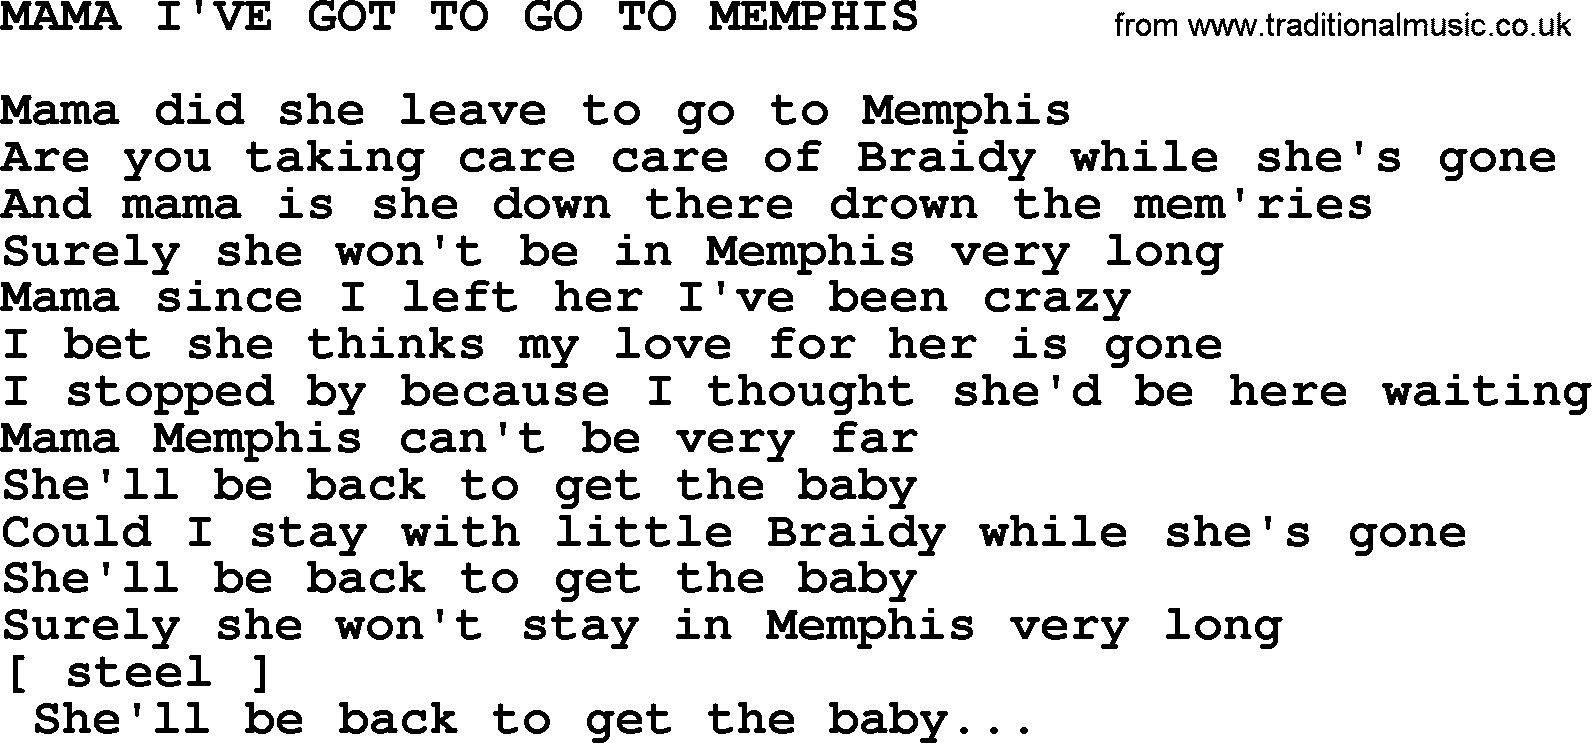 Merle Haggard song: Mama I've Got To Go To Memphis, lyrics.